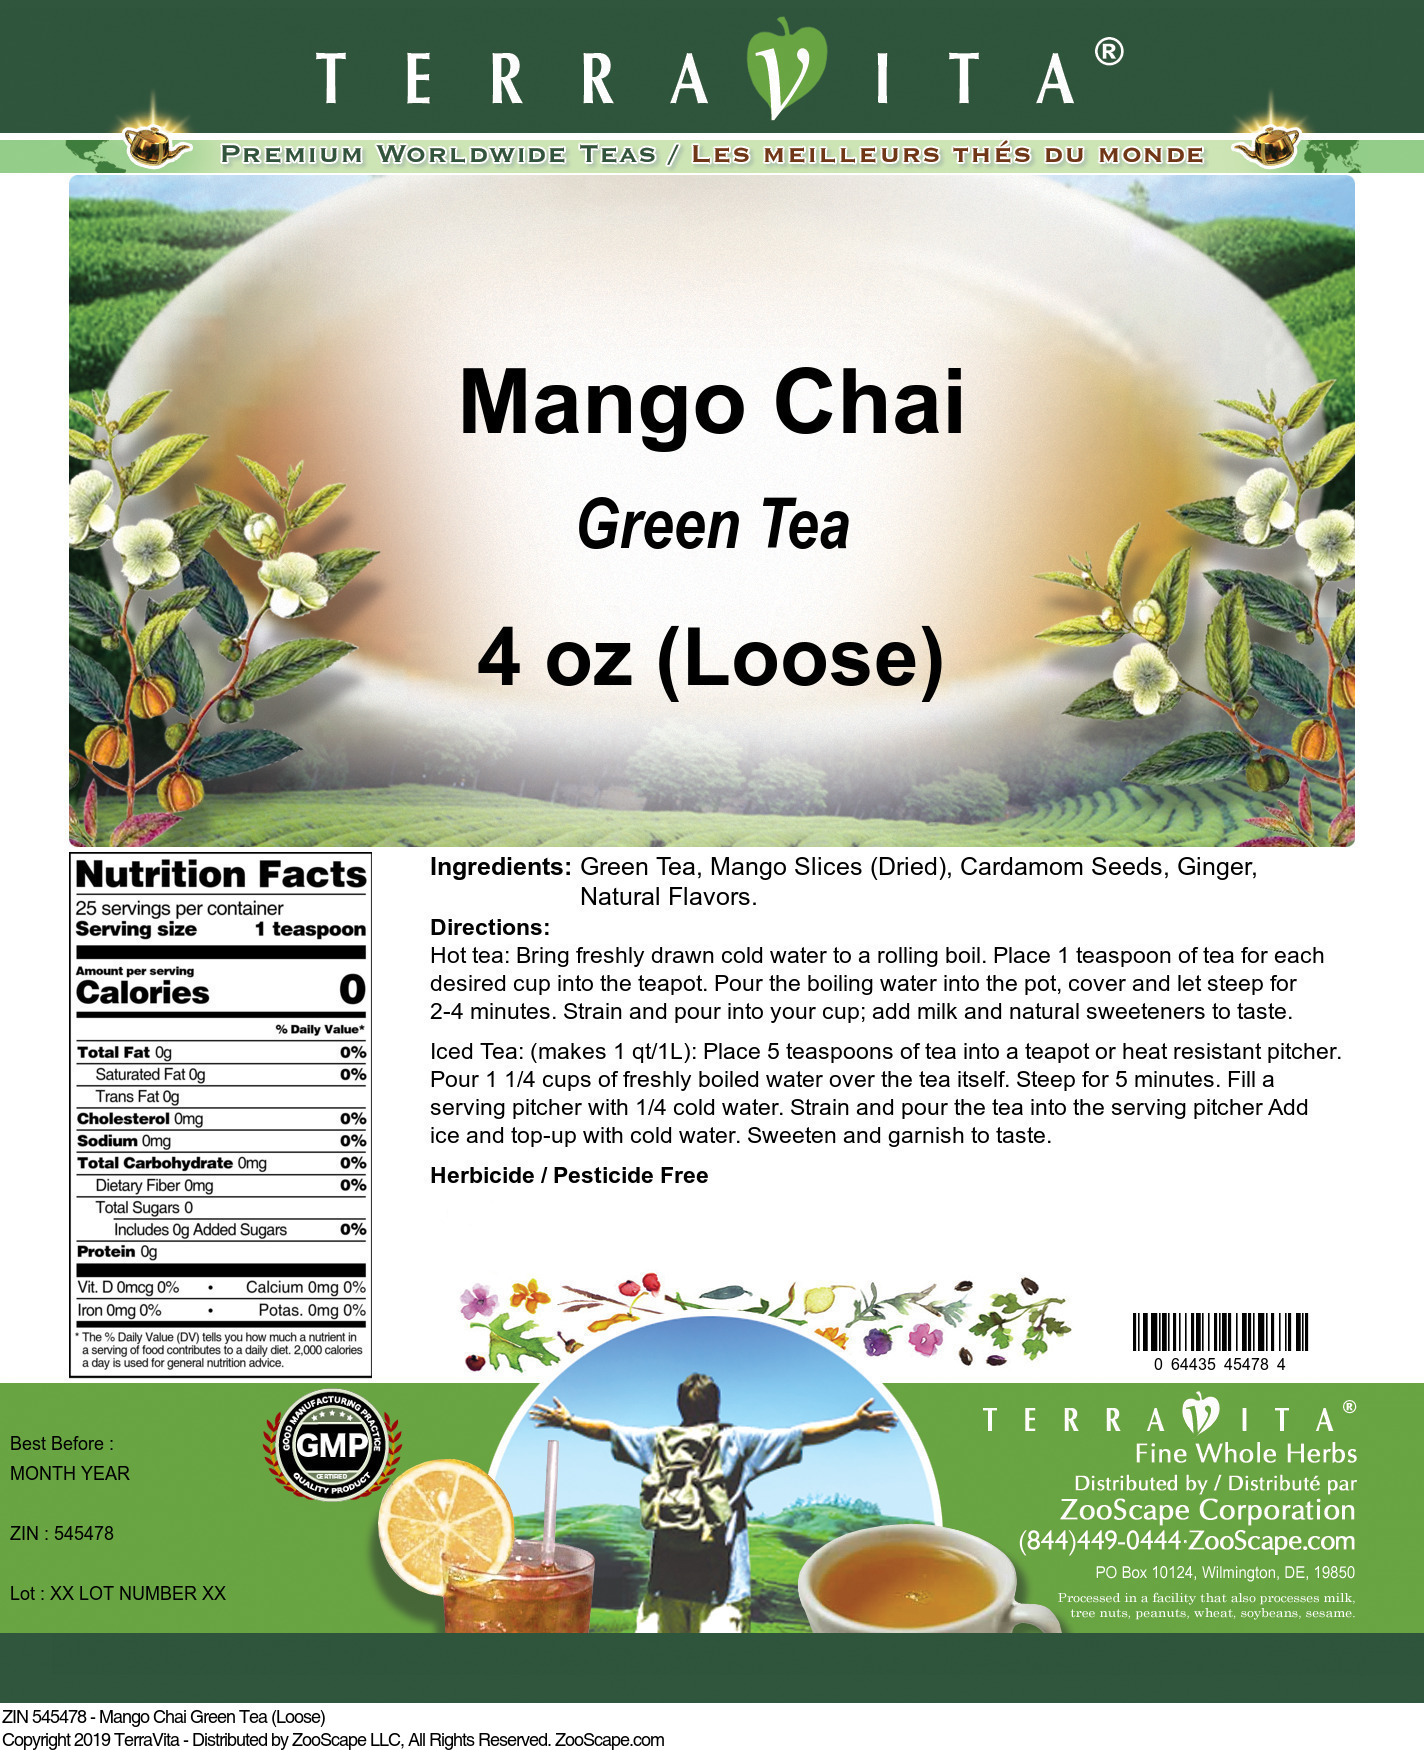 Mango Chai Green Tea (Loose) - Label